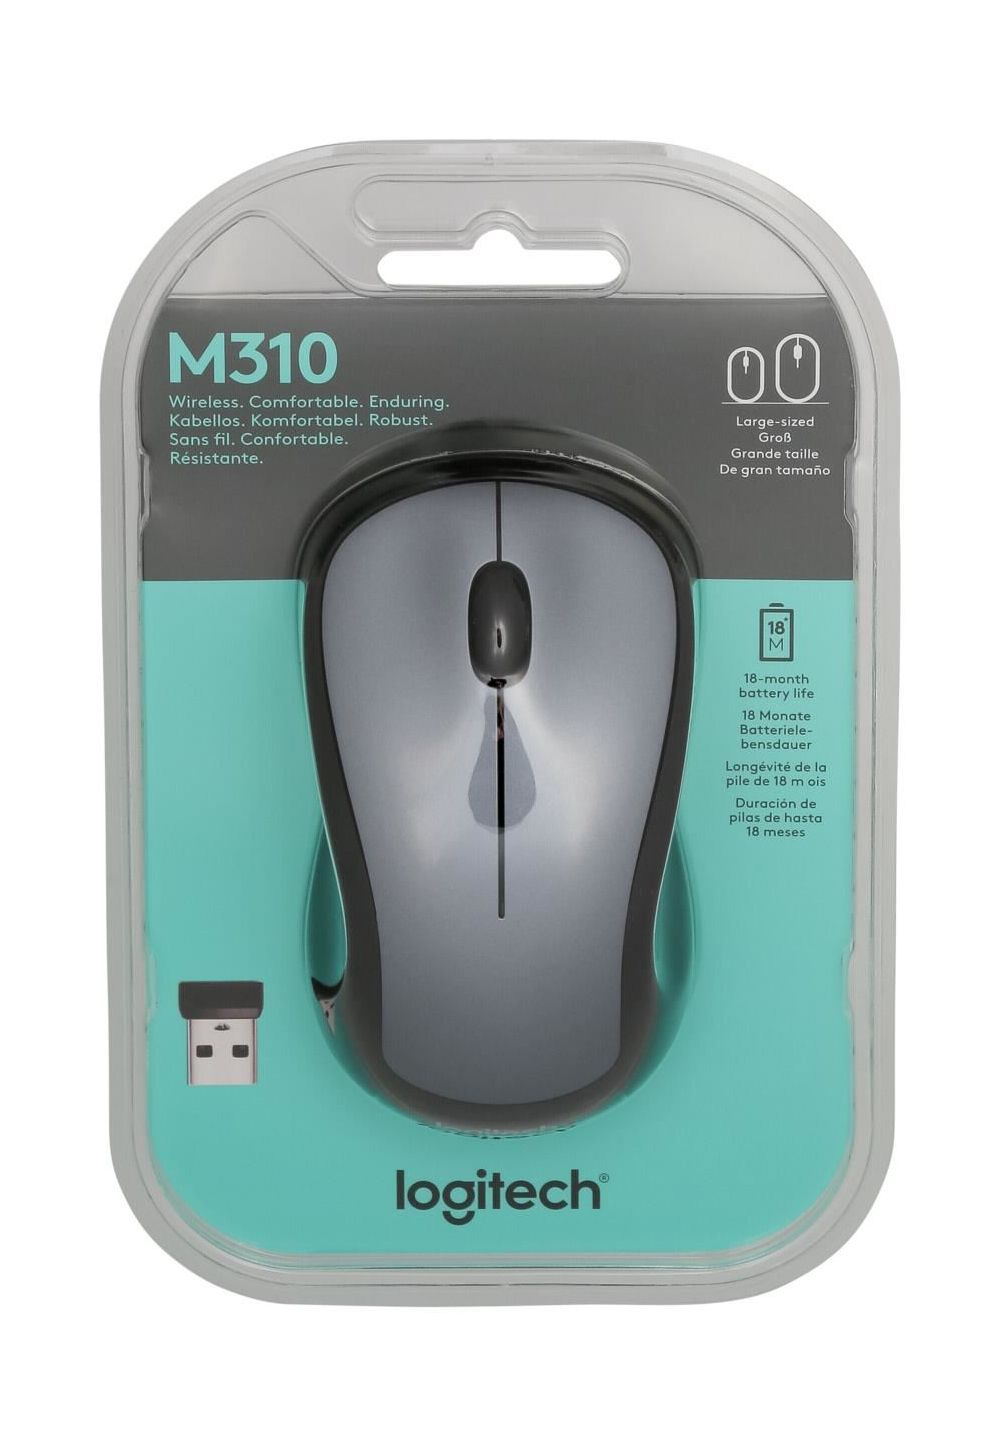 Logitech Wireless Mouse m310 Silver. Мышка м310 Logitech. M310 Wireless. Беспроводная мышь m310